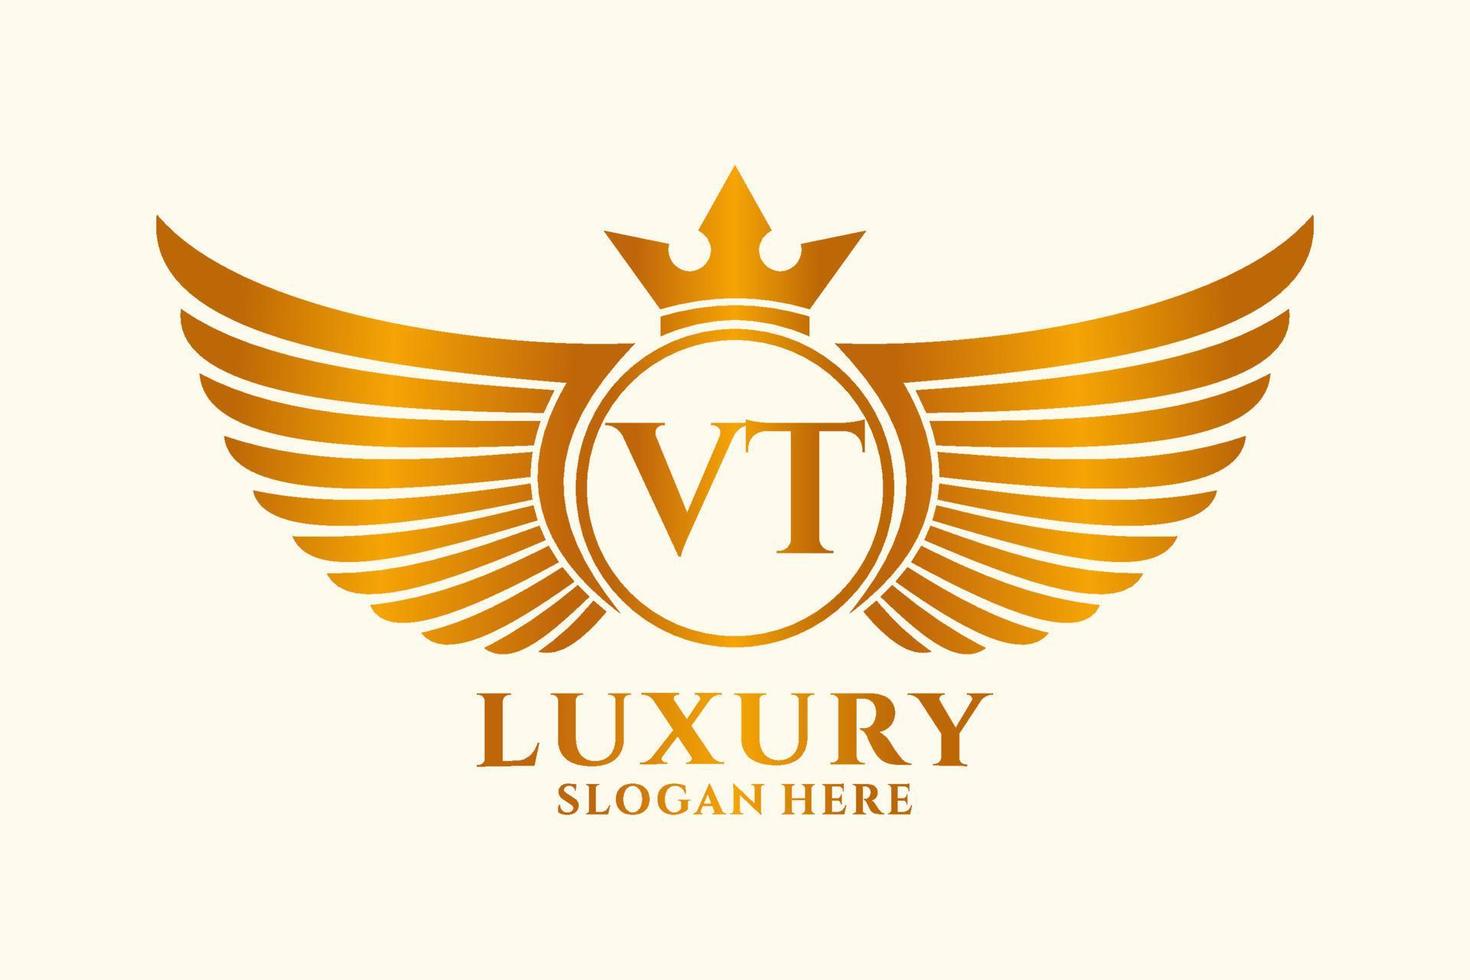 luxe Koninklijk vleugel brief ww kam goud kleur logo vector, zege logo, kam logo, vleugel logo, vector logo sjabloon.